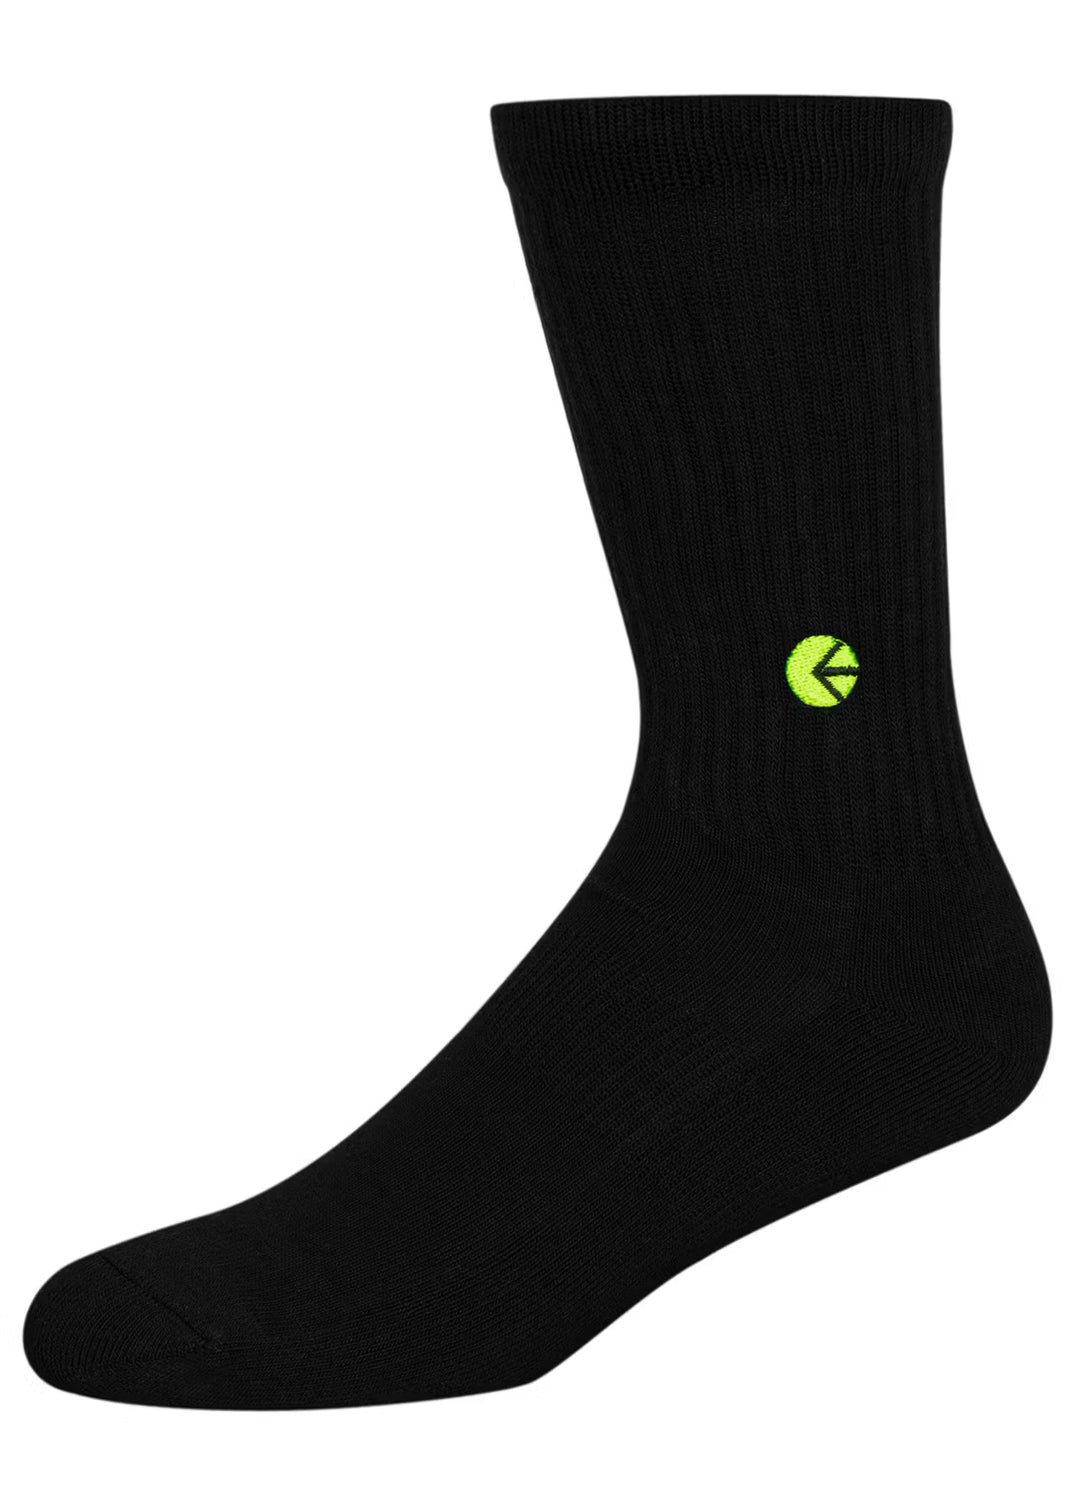 Black Crew Sock - Flo Green Logo